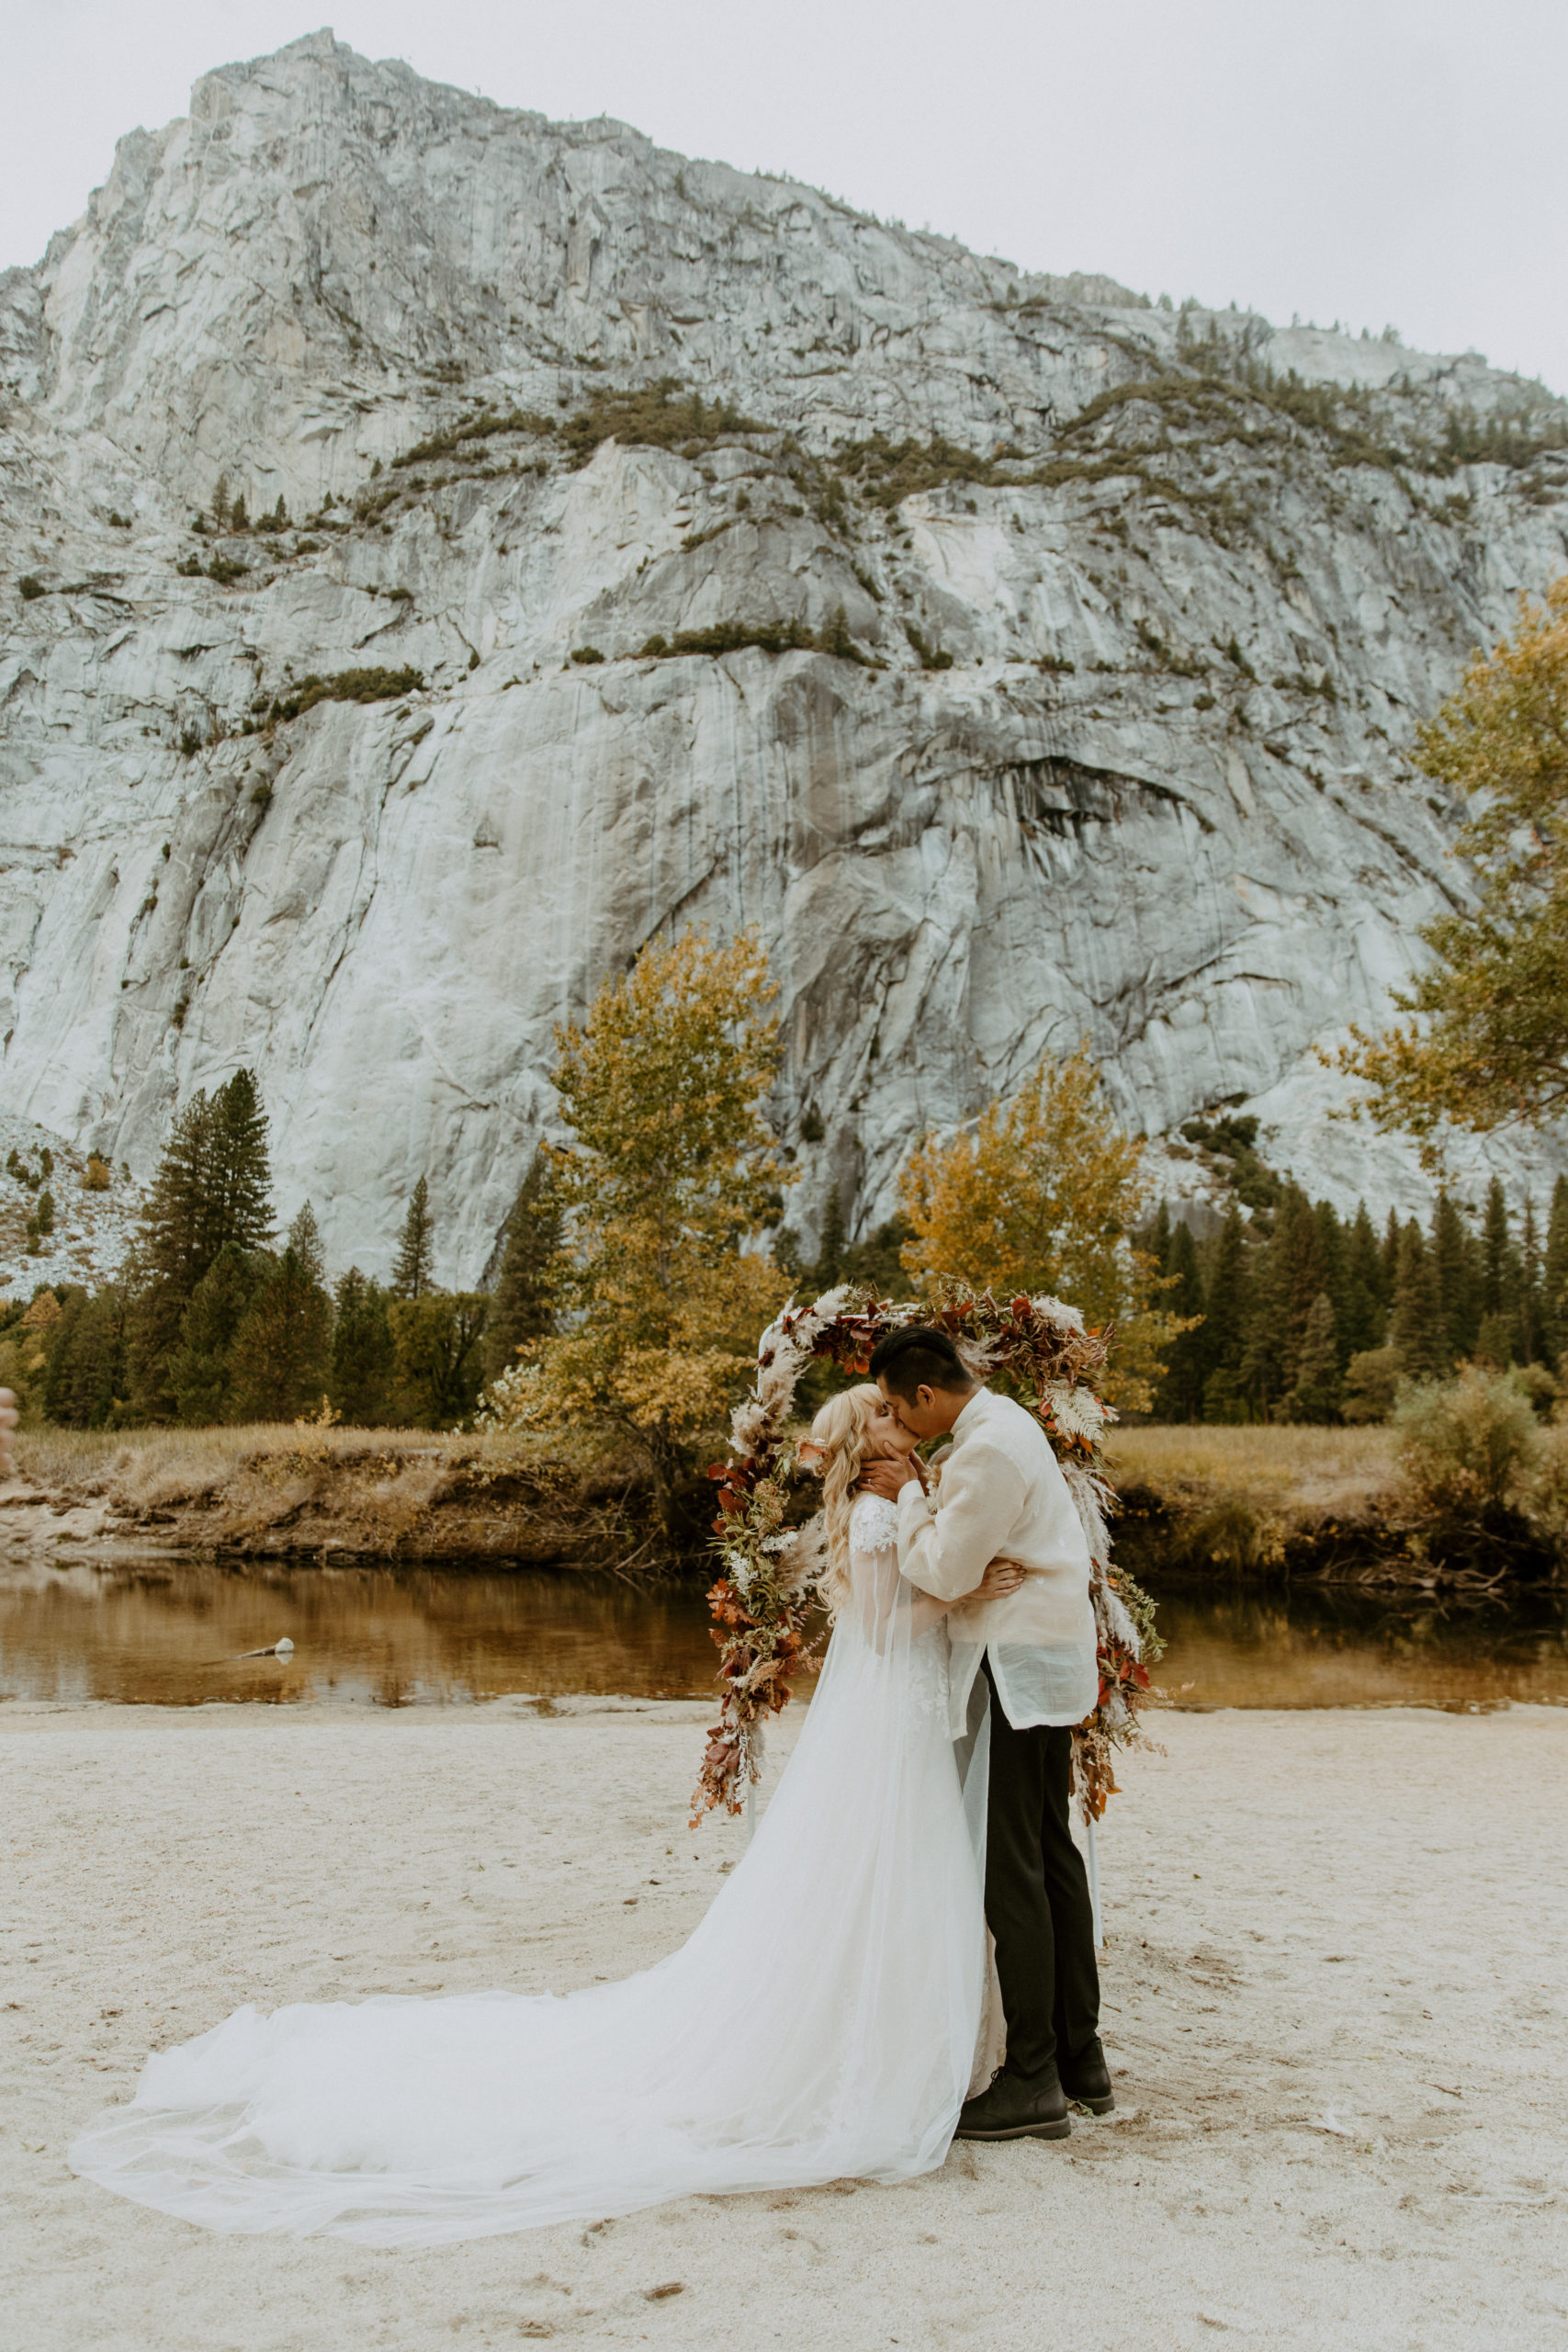 the bride and groom kissing at Yosemite